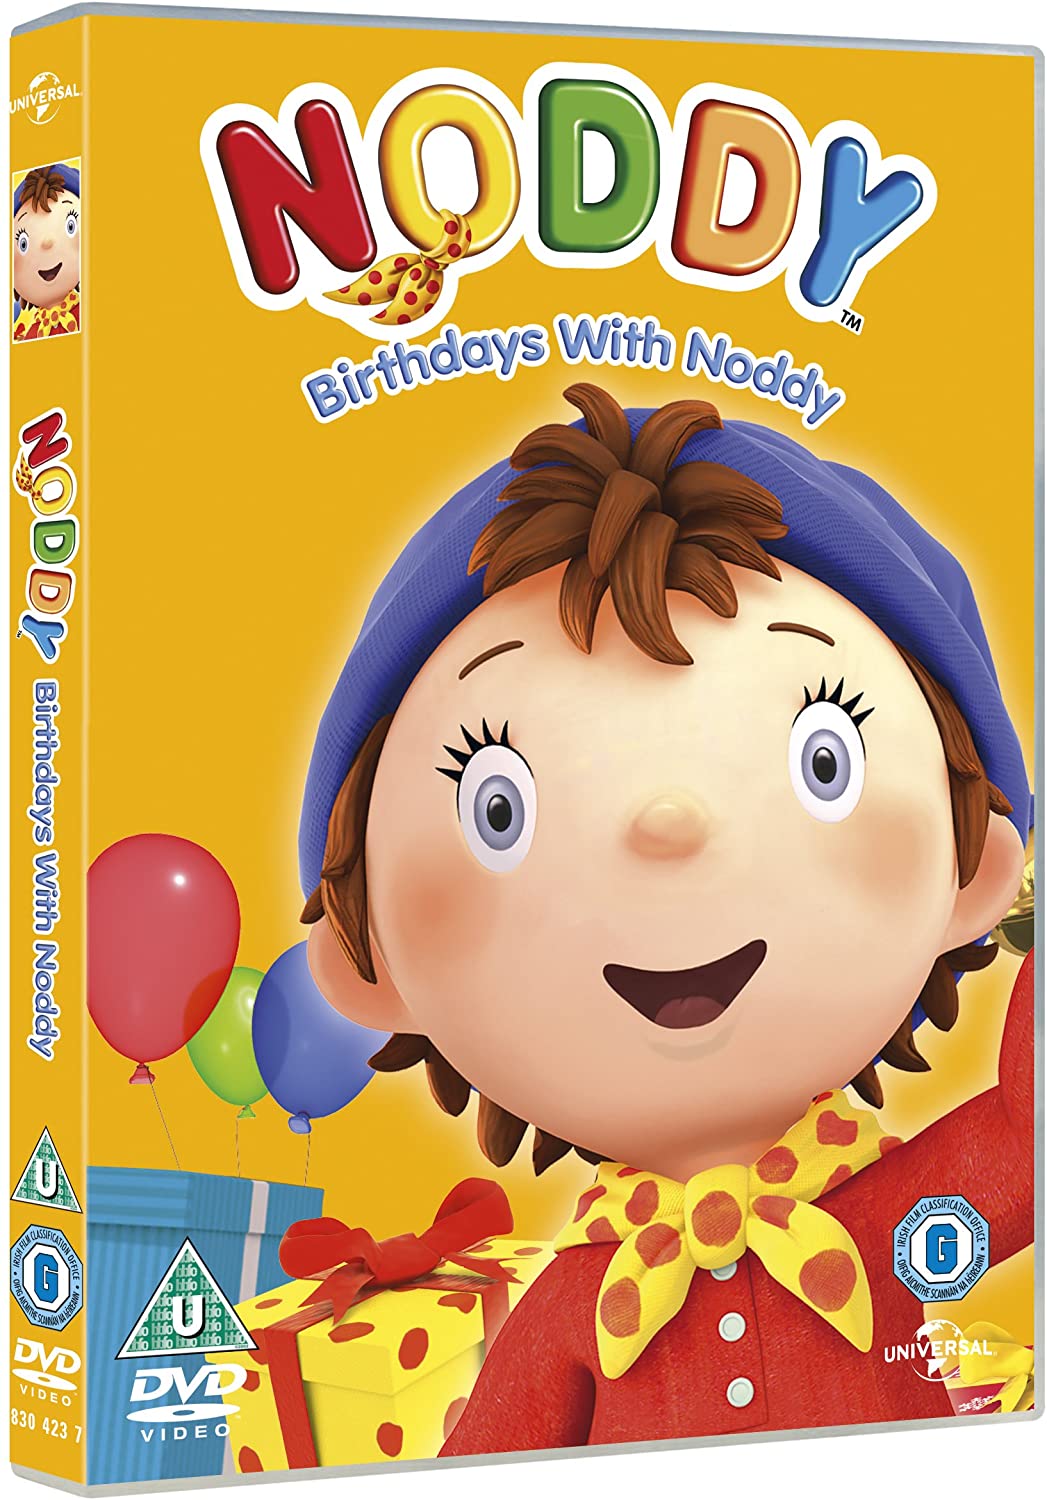 Noddy in Toyland: Birthdays With Noddy (DVD)